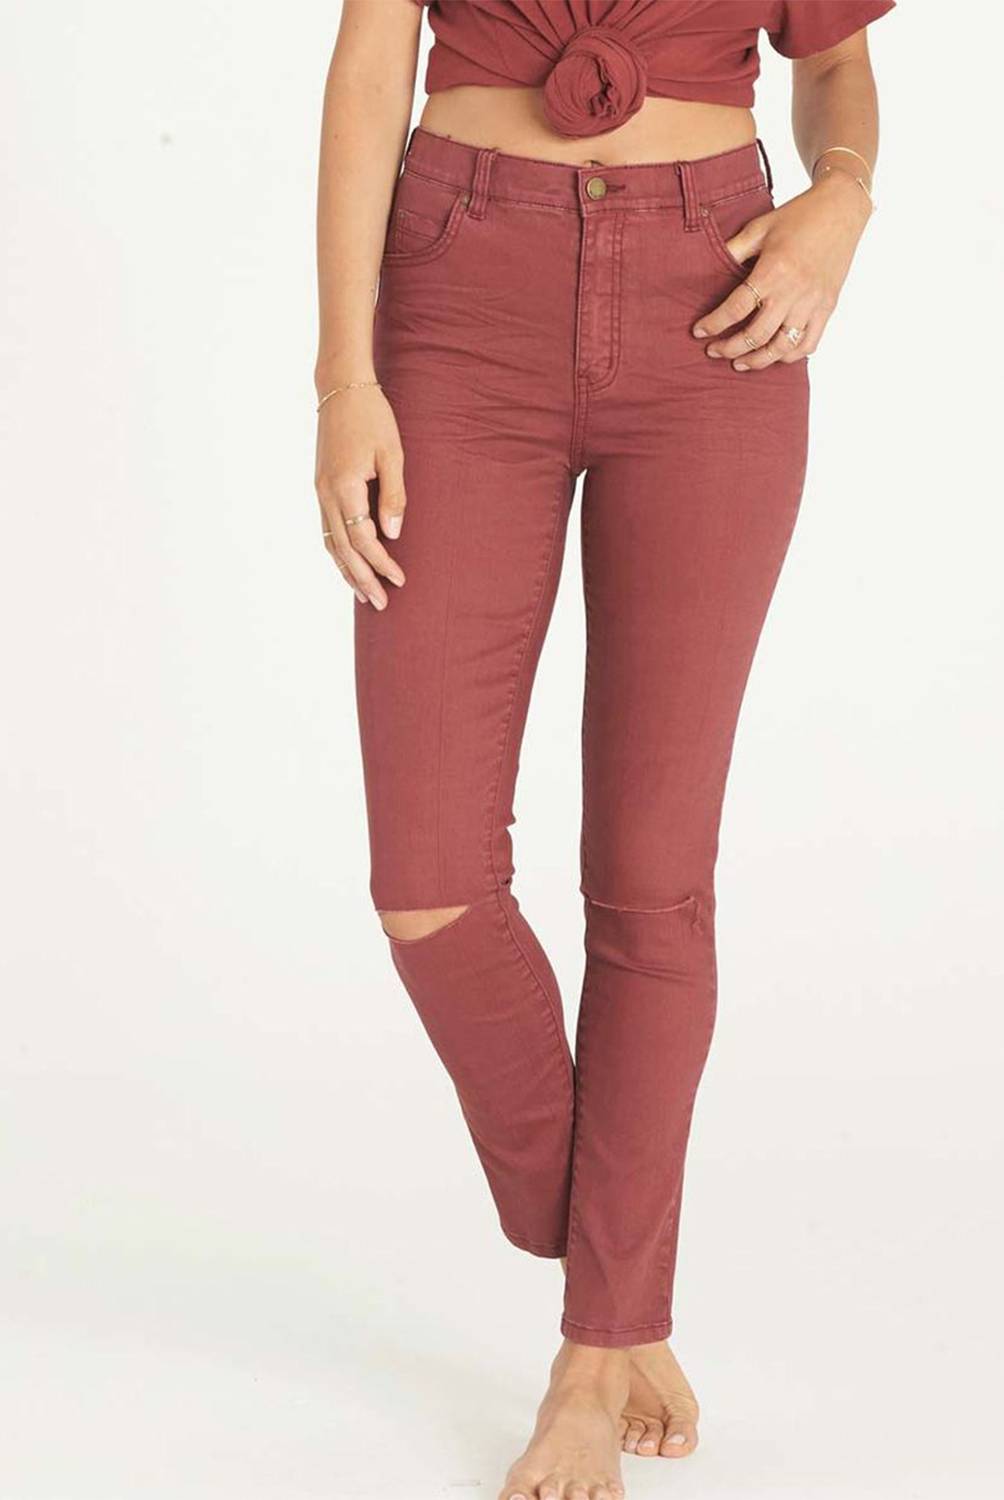 BILLABONG - Jeans Skinny Tiro Alto Mujer